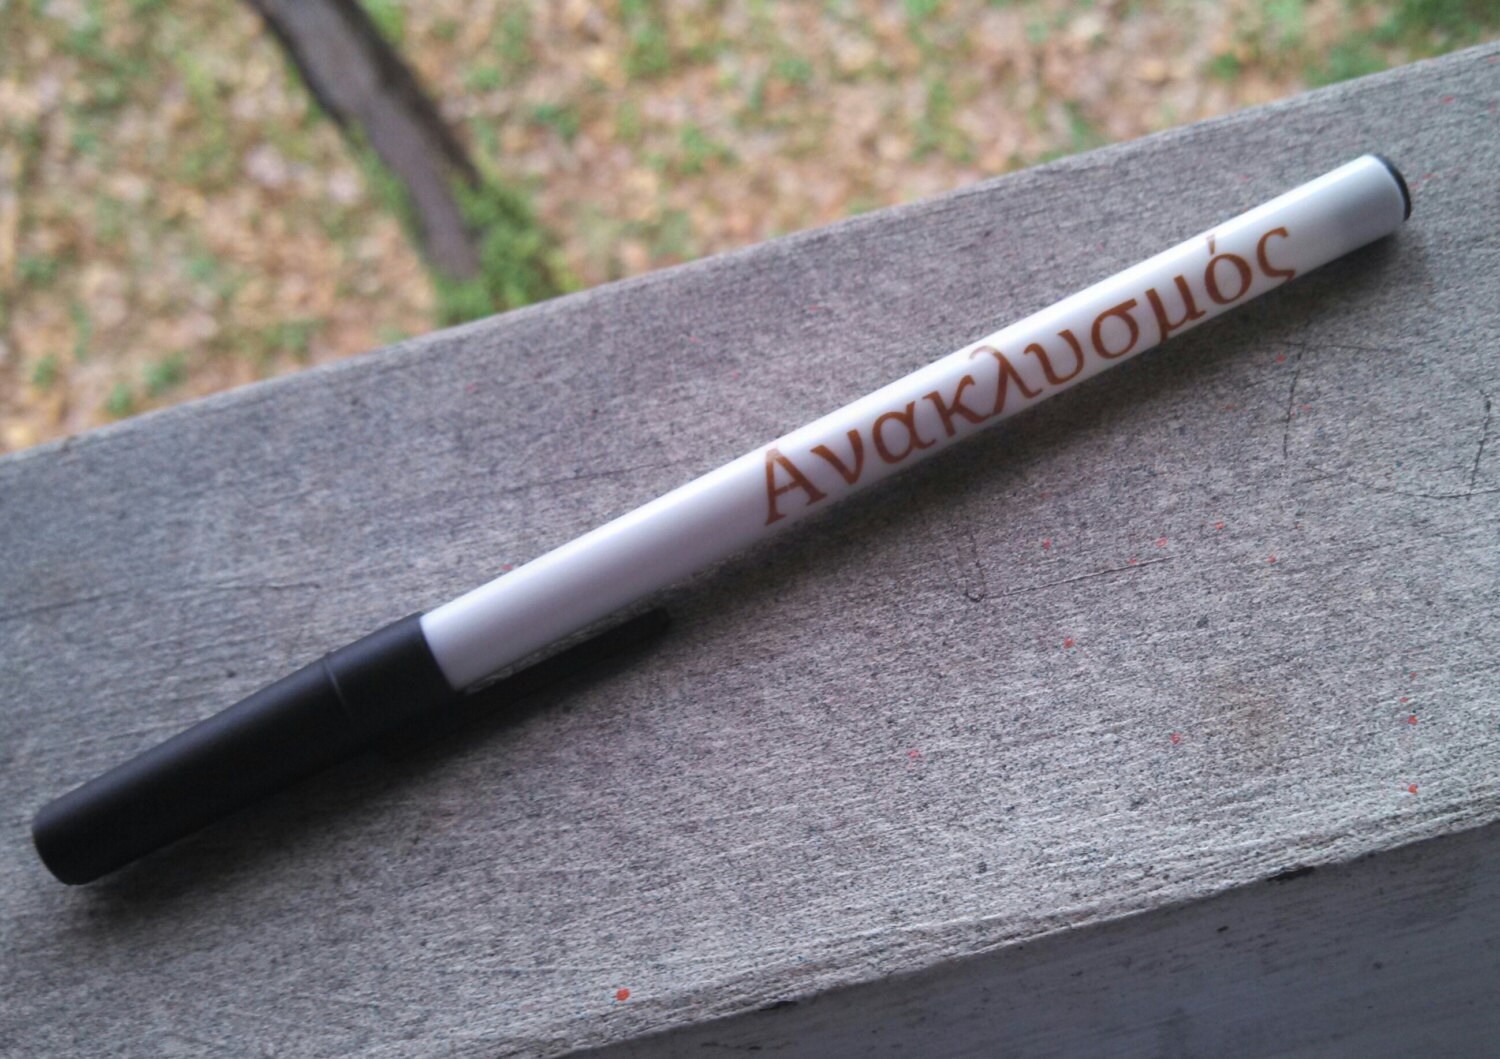 Anaklusmos Percy Jackson's Pen